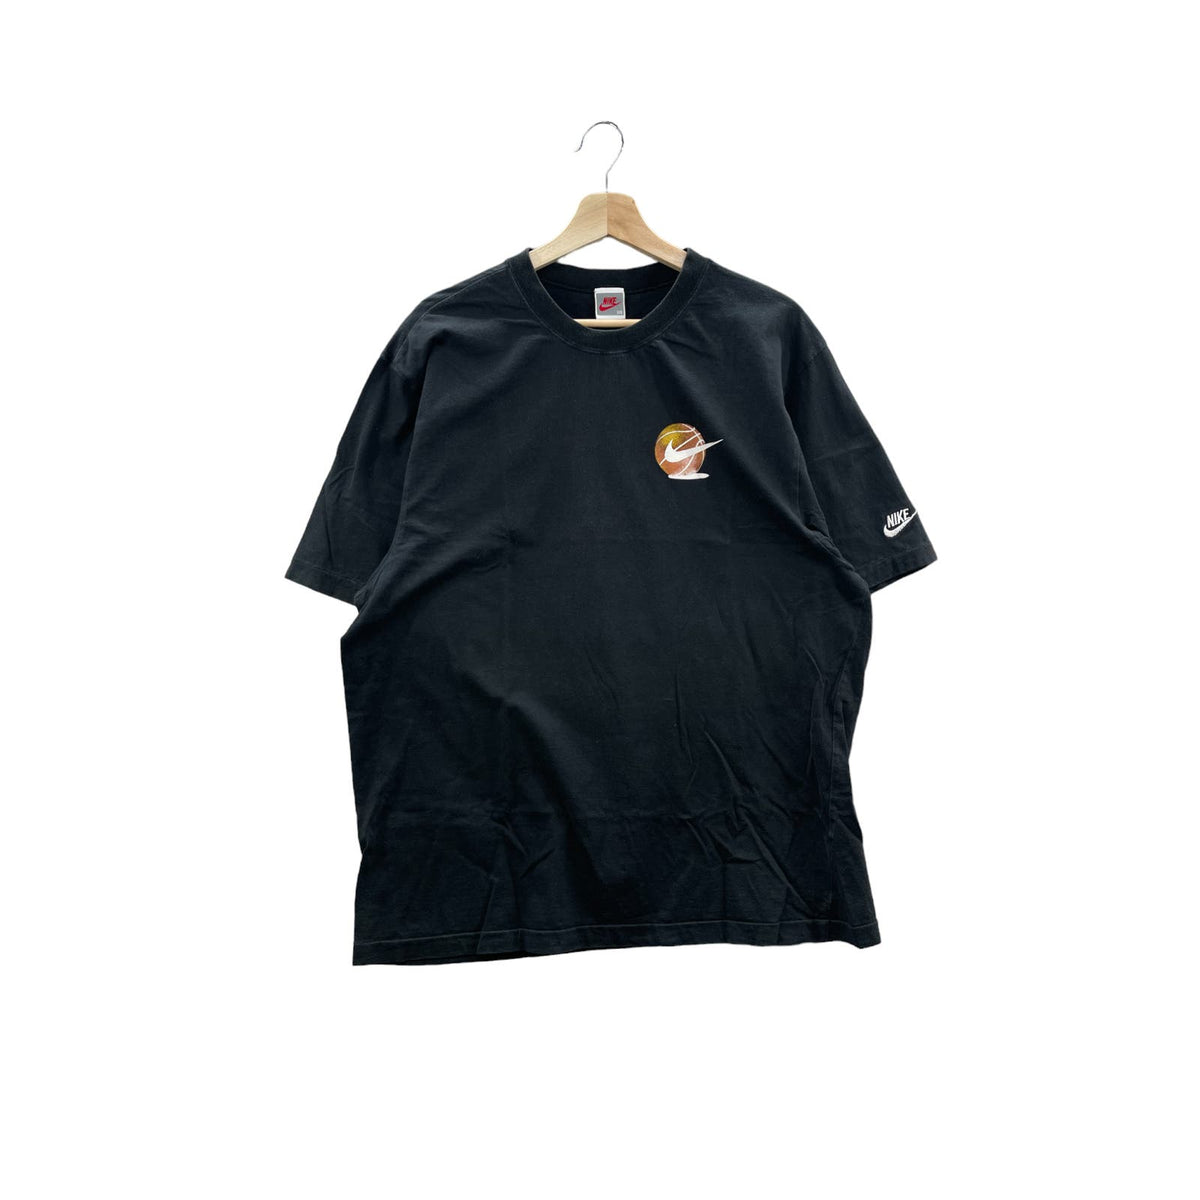 Vintage 1990's Nike Basketball Chris Webber Graphic T-Shirt